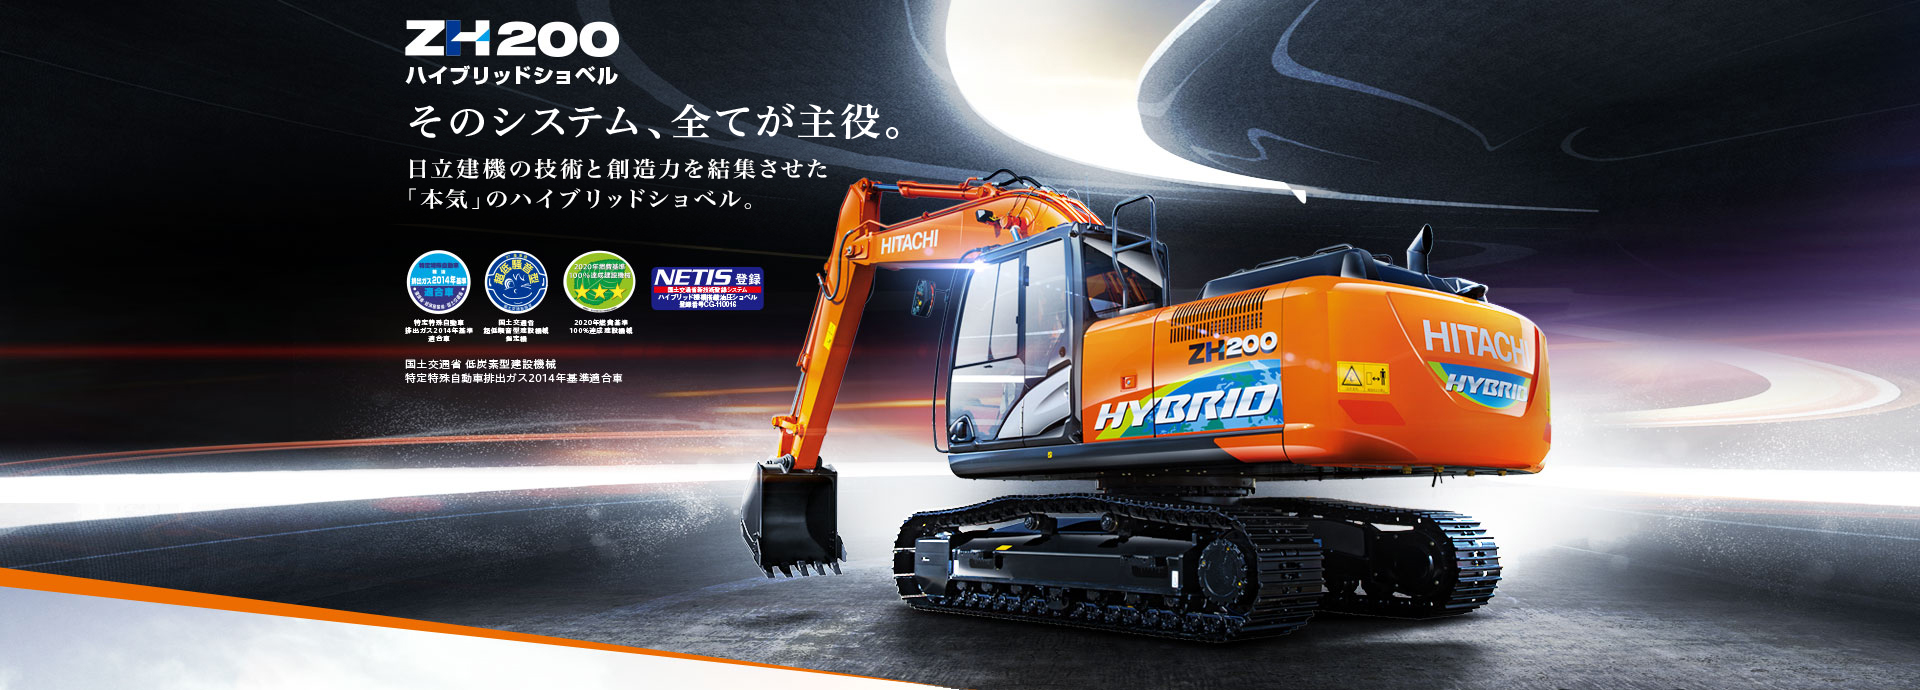 ZH200-6 : Hitachi Construction Marchinery